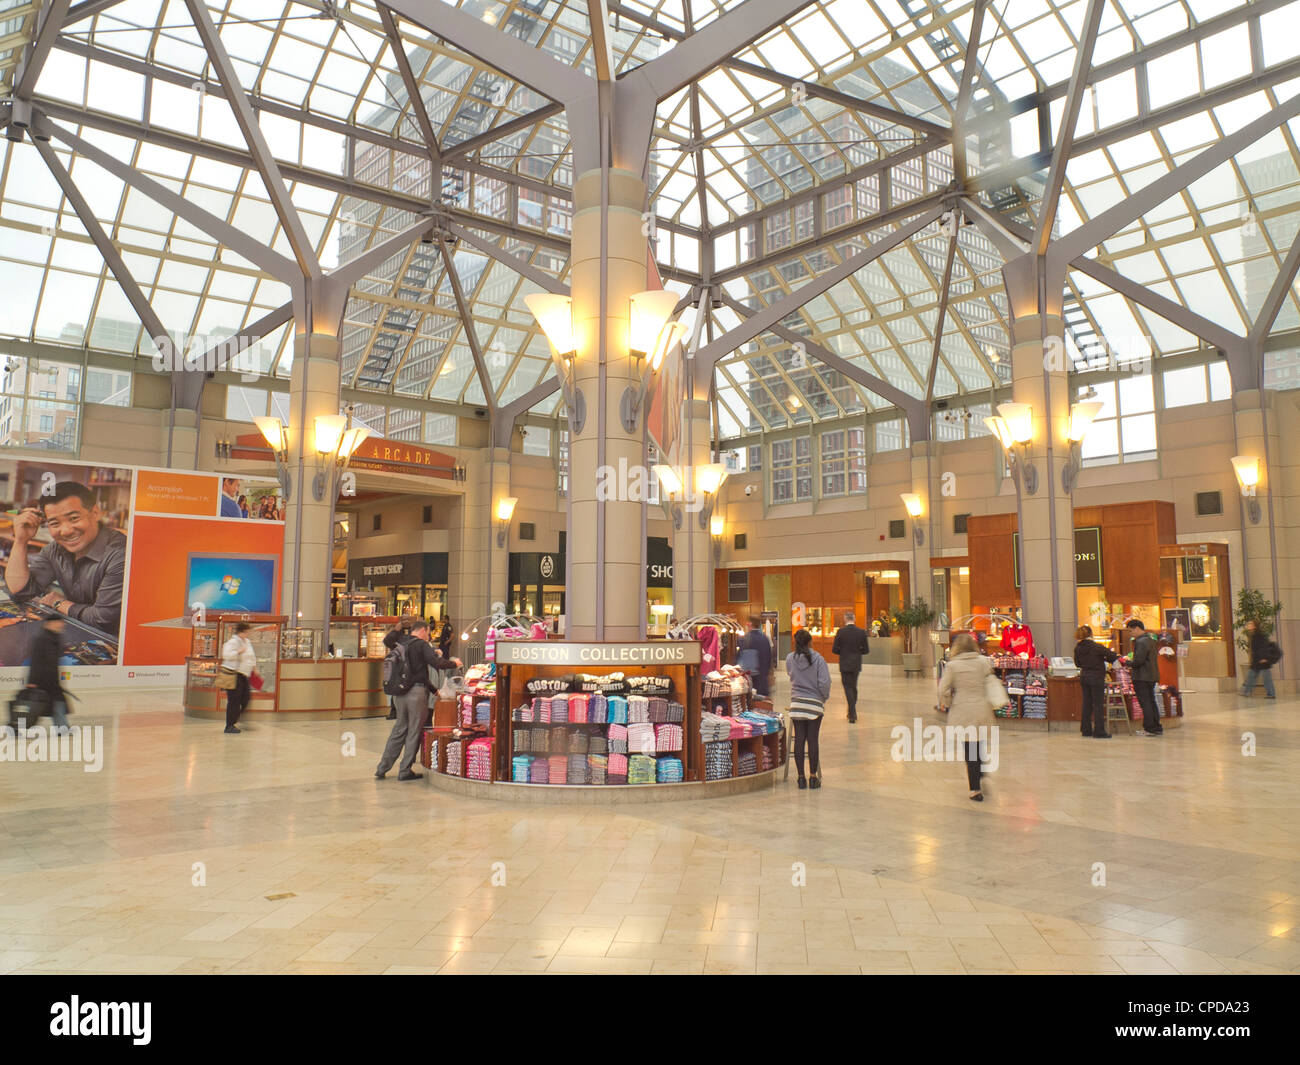 A Shopping Mall within The Westin Hotel, Boston MA Stock Photo - Alamy